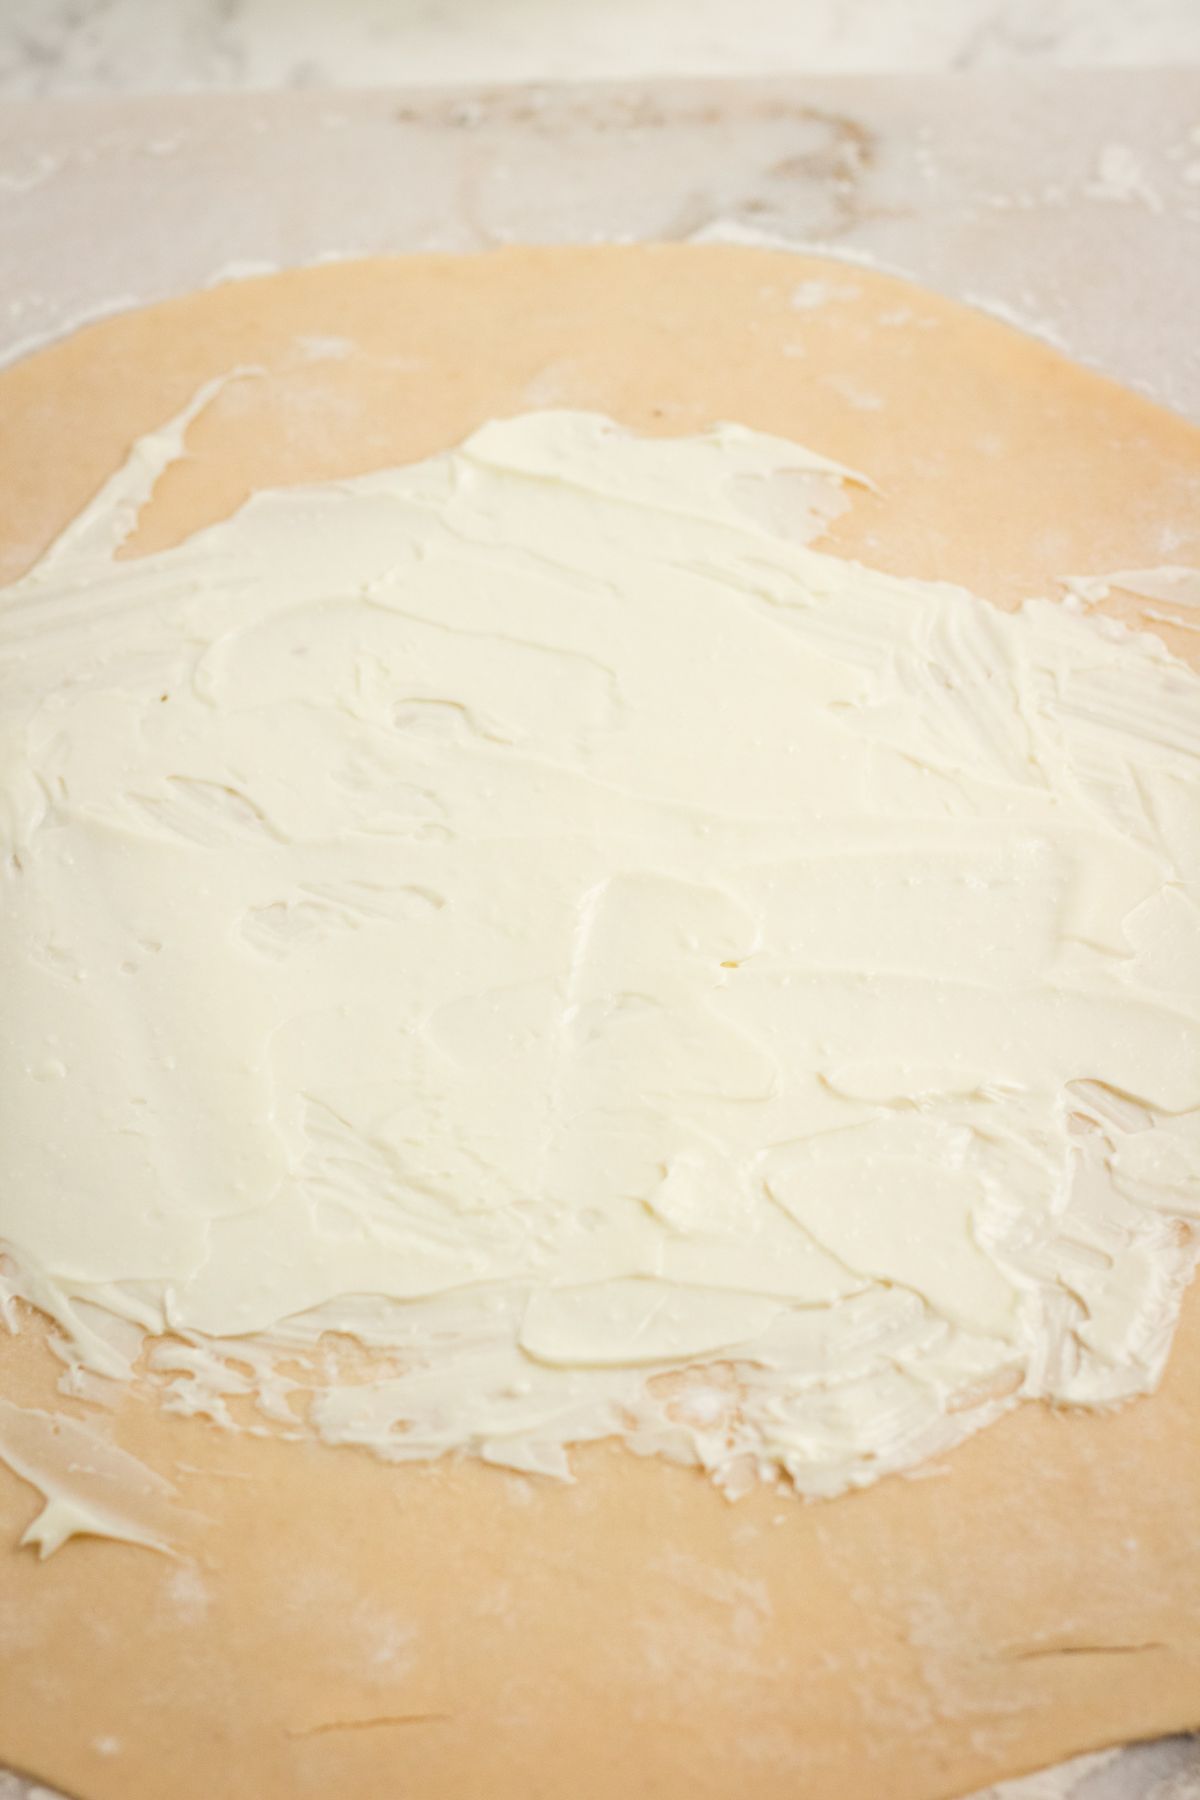 pie dough spread with cream cheese.